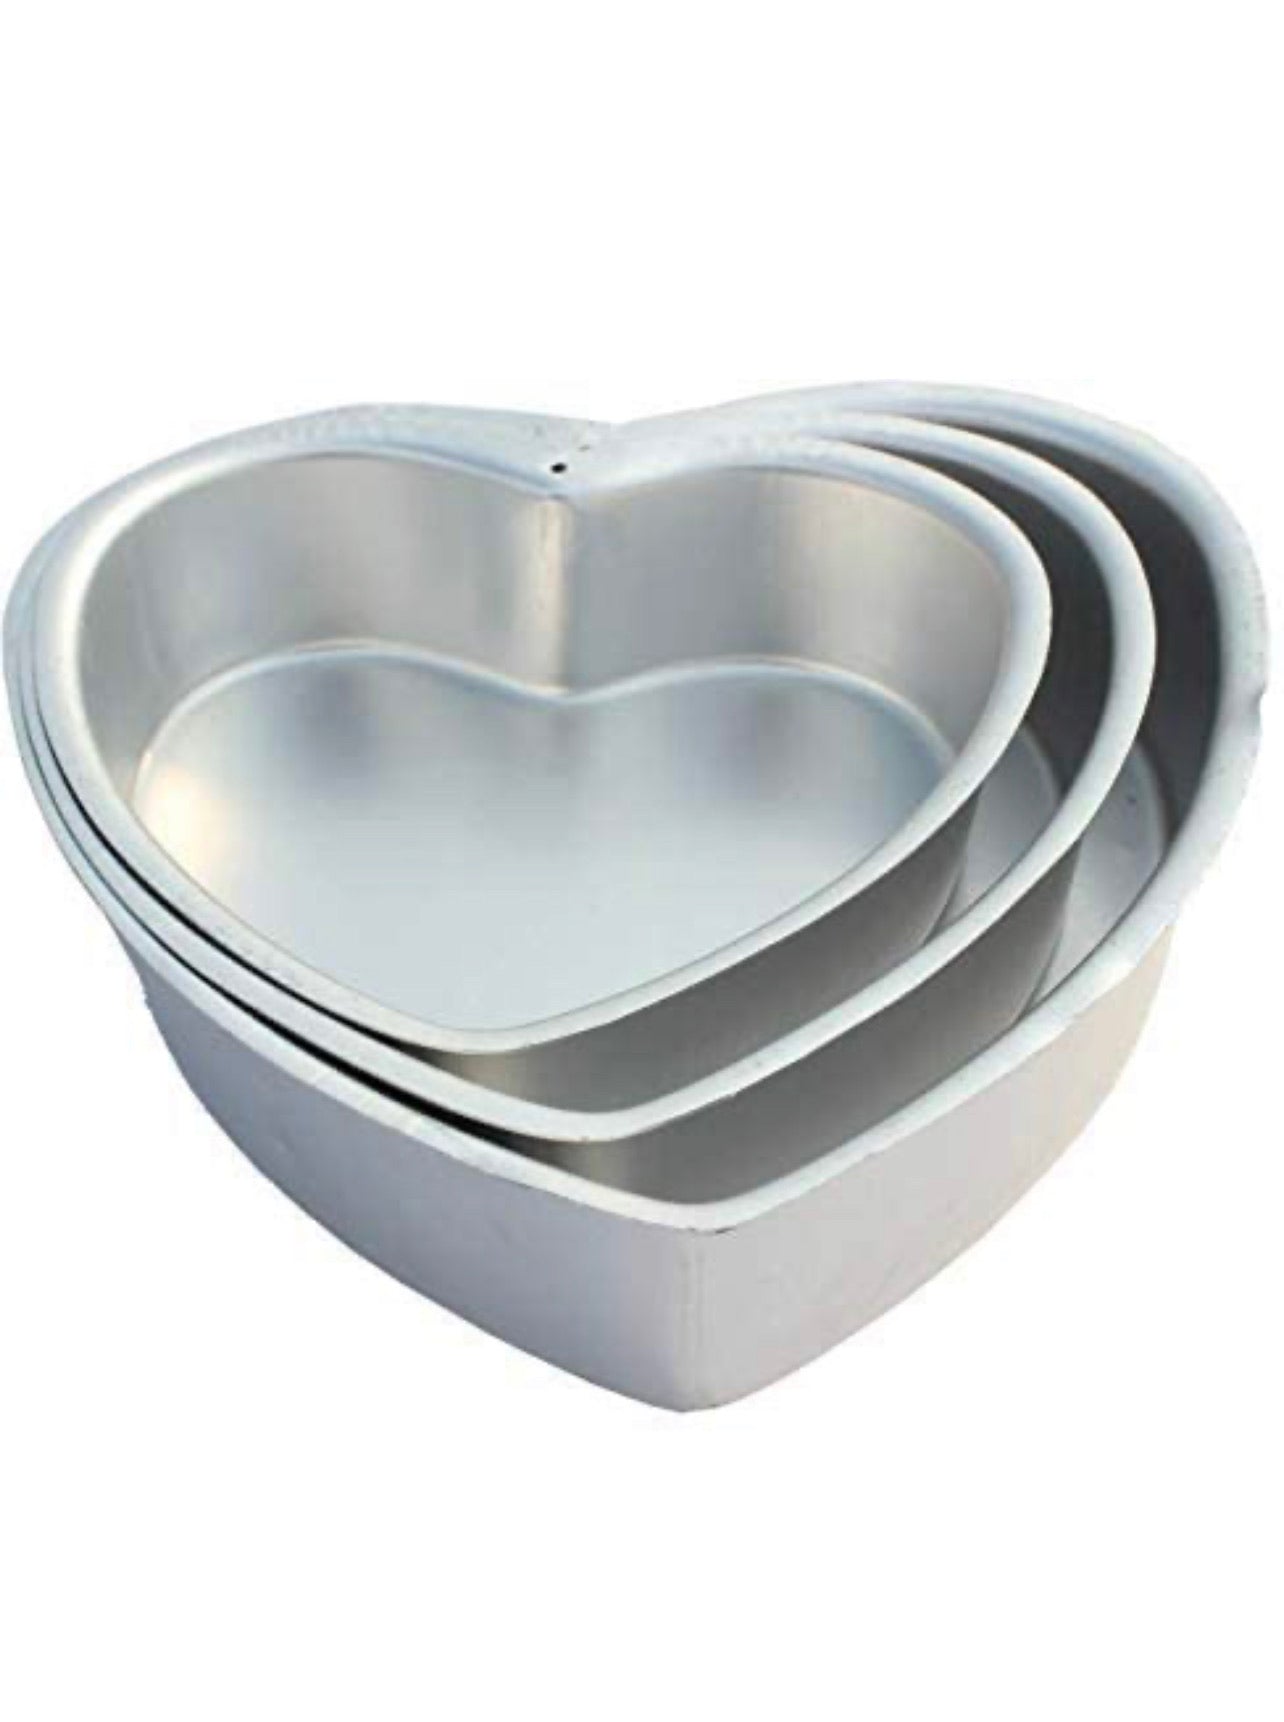 Aluminium Cake Baking Mould Heart Shaped Set of 3 Different Sizes